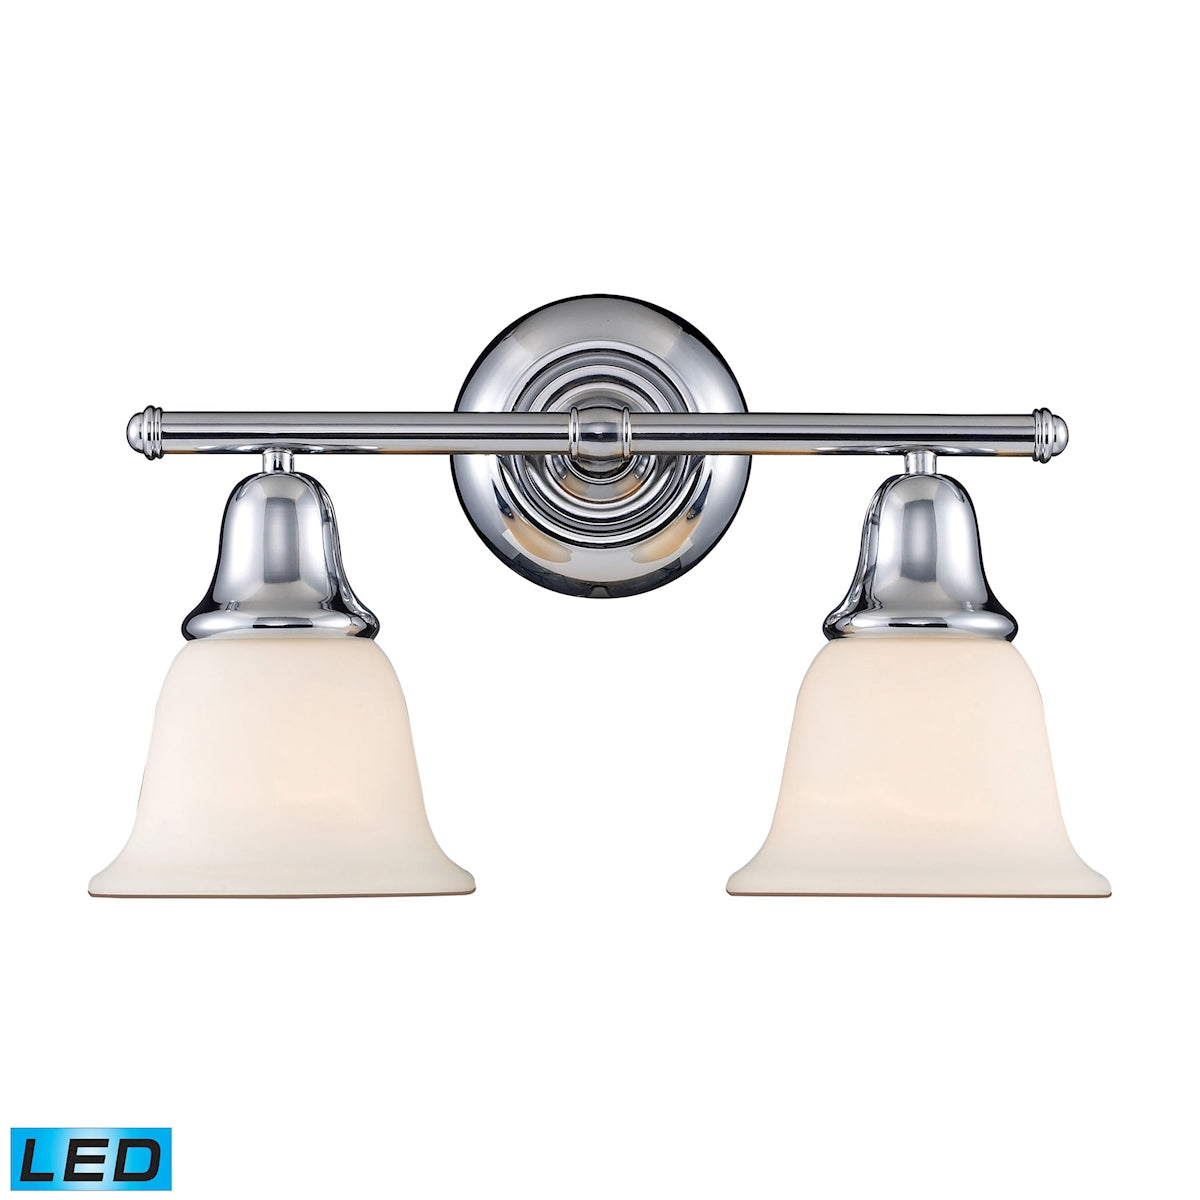 ELK Lighting 67011-2-LED Berwick 2-Light Vanity Lamp in Polished Chrome with White Glass - Includes LED Bulbs